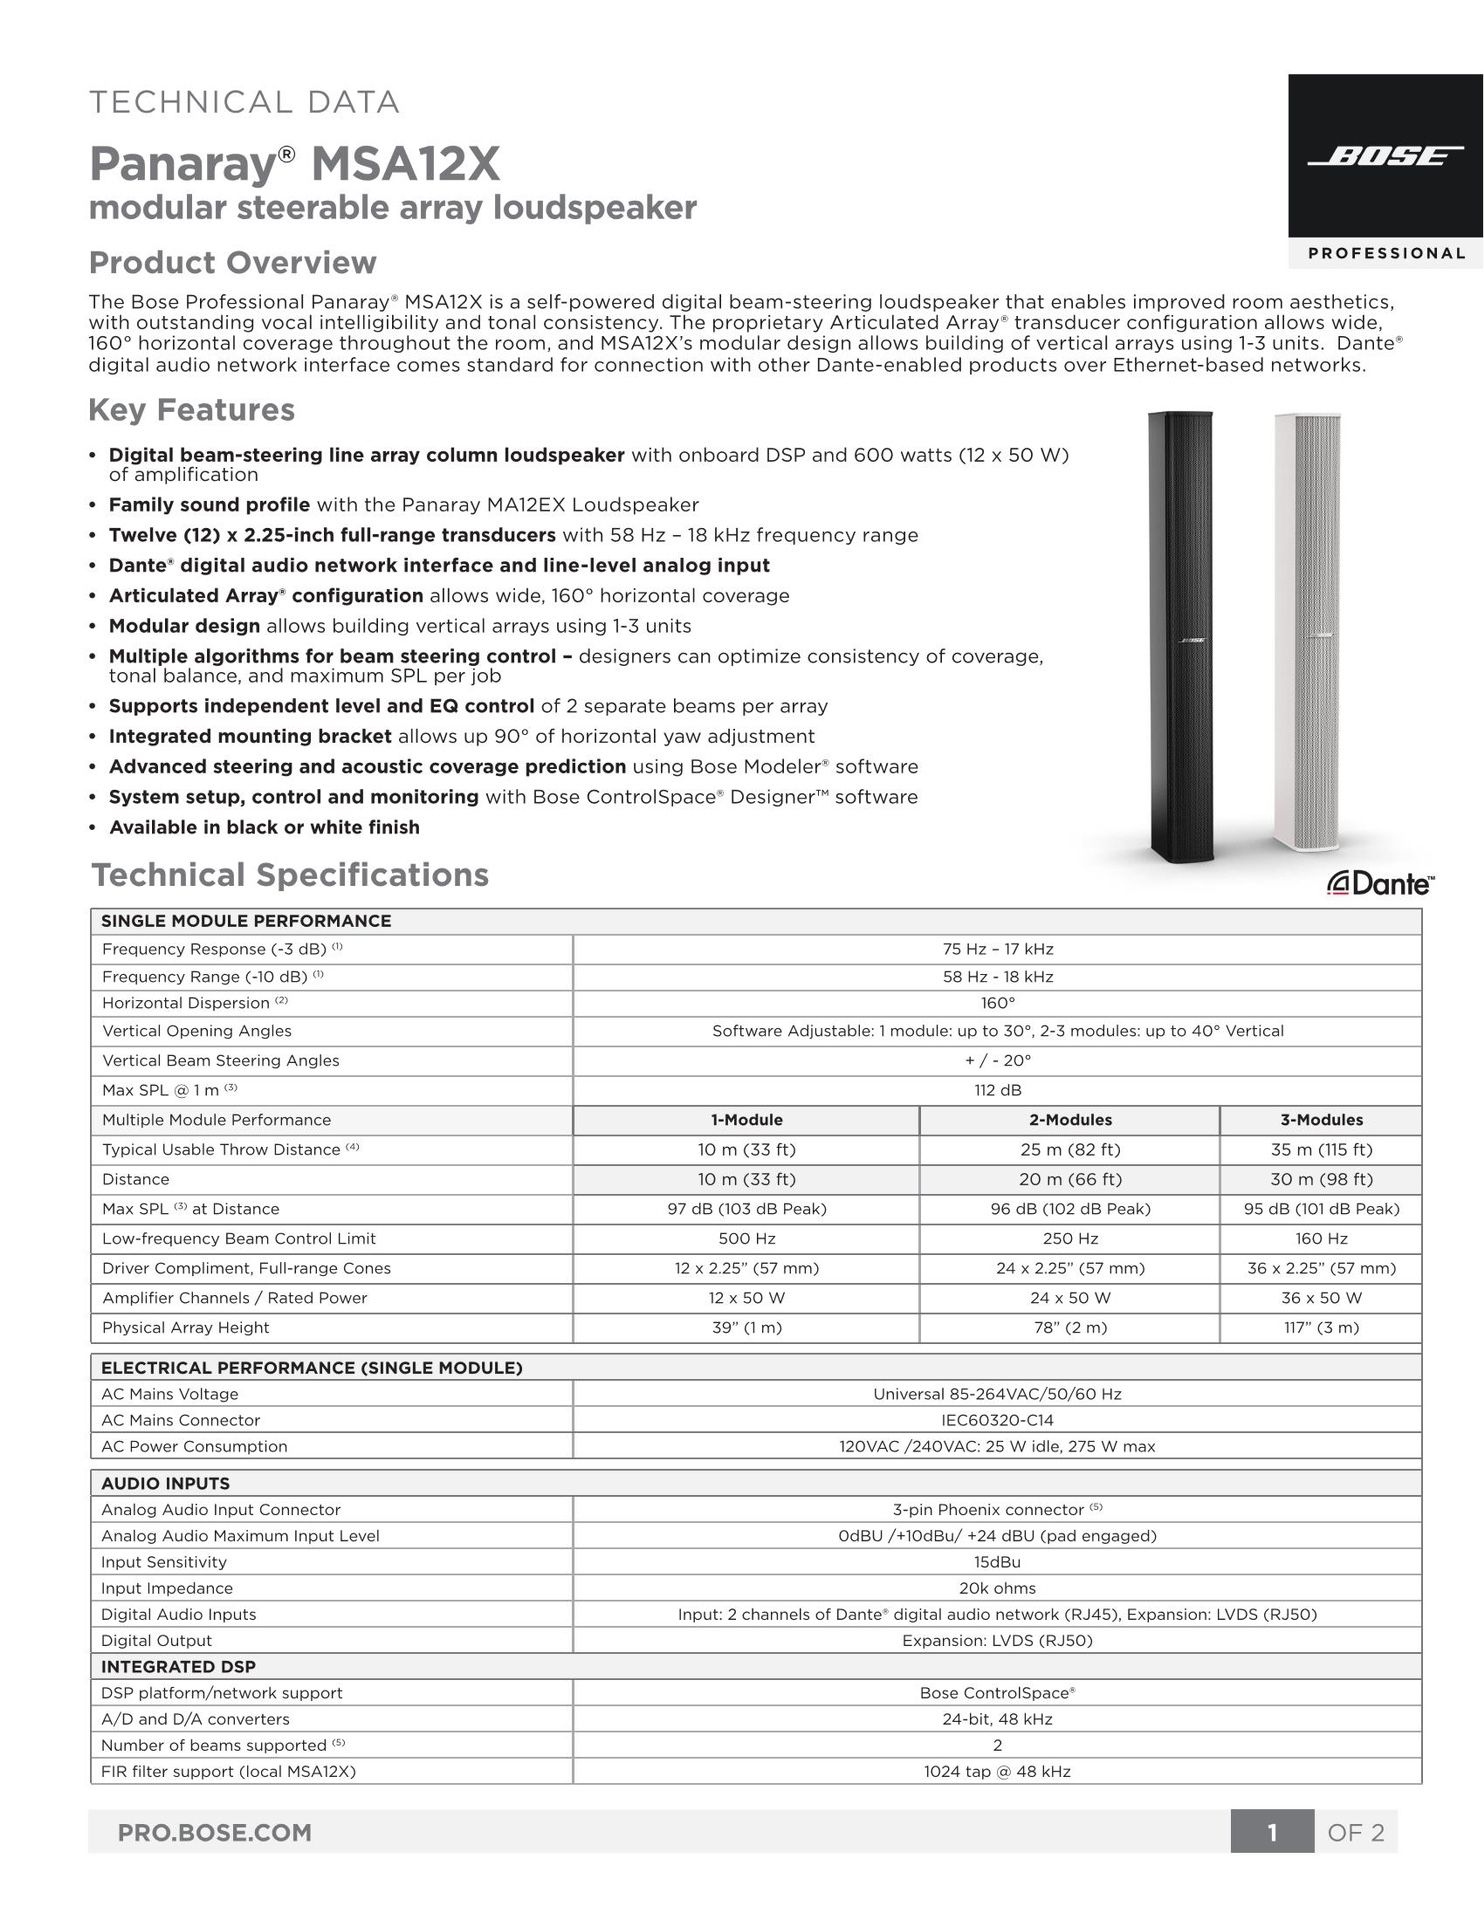 Bose Panaray MSA12X Dante Power Column Pro Speakers